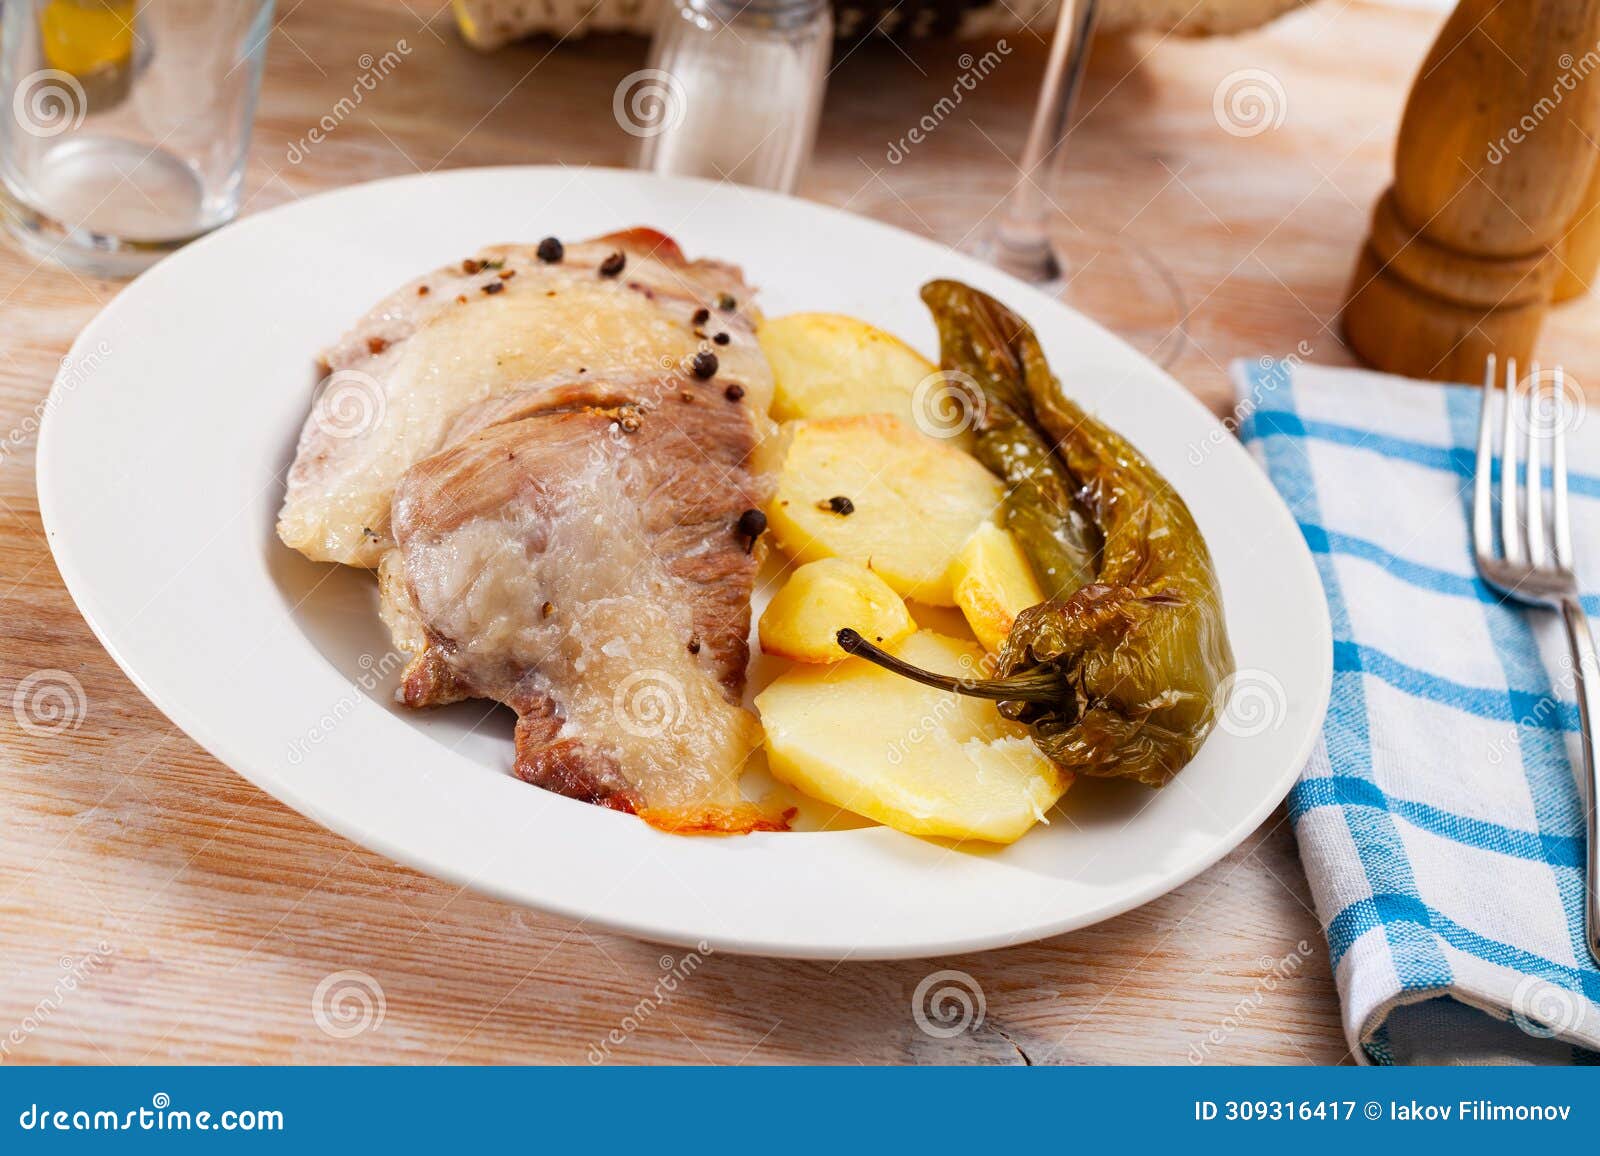 spanish secreto de cerdo - roasted pork served with potatoes, stewed pepper